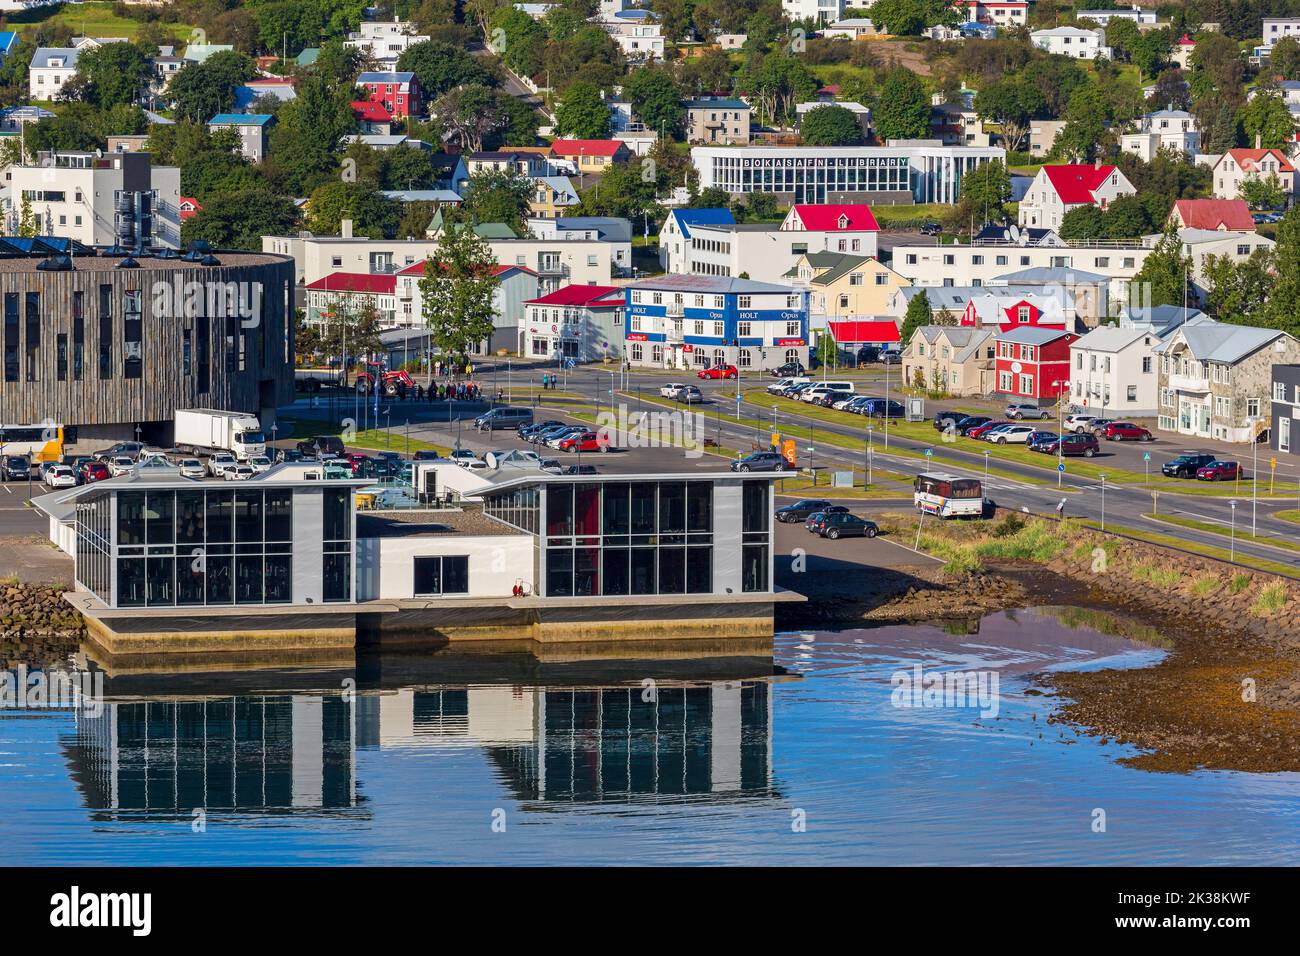 Centre de remise en forme ATAK, Akureyri Waterfront, Islande, Europe Banque D'Images